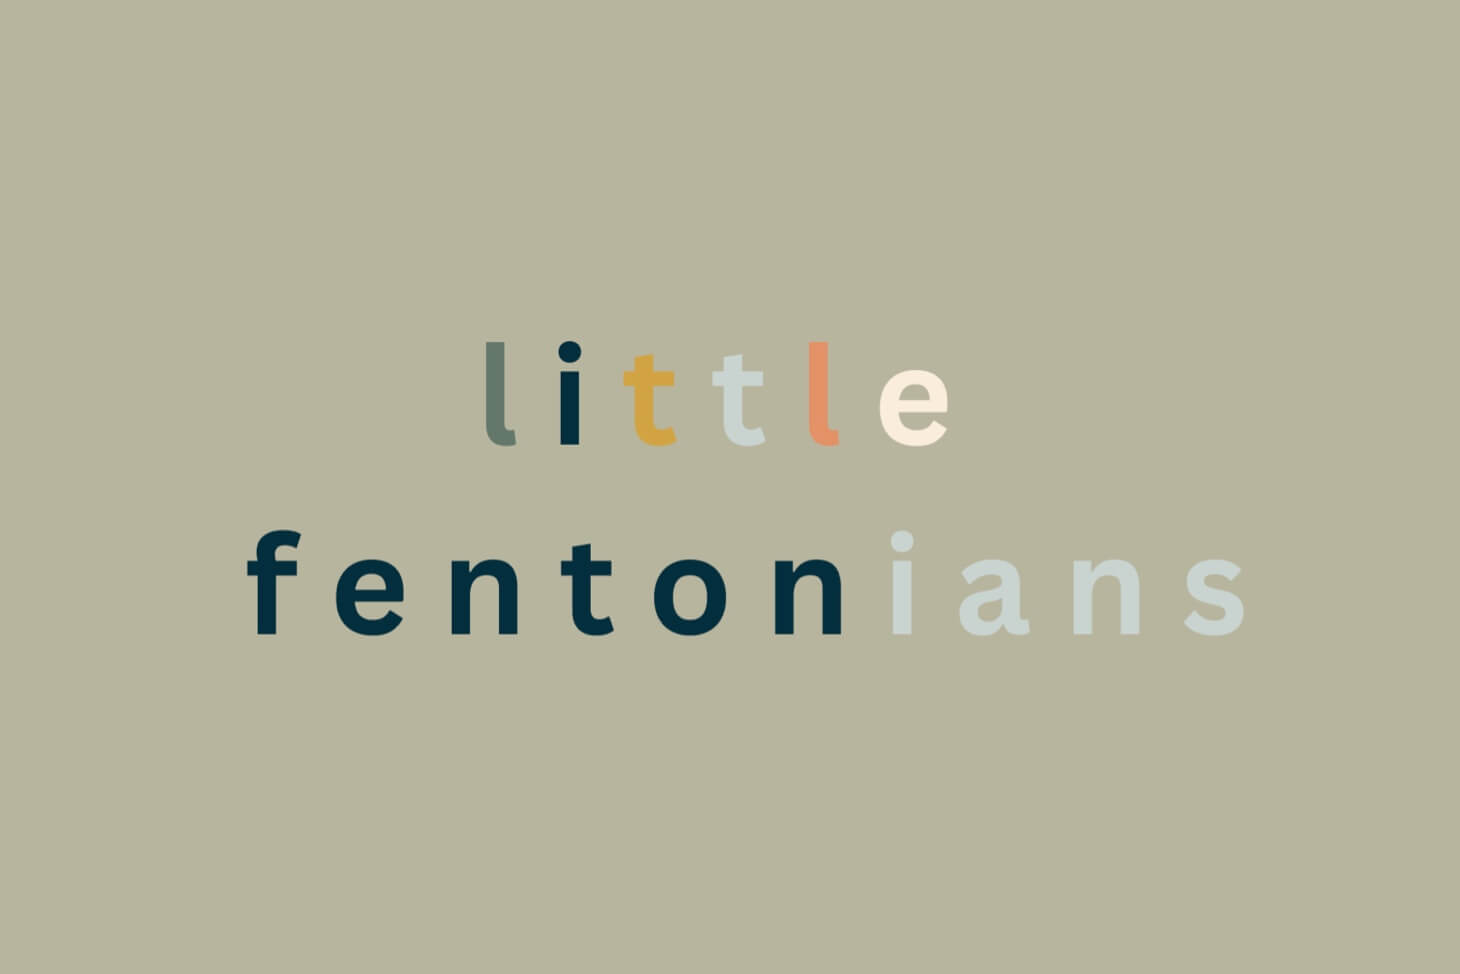 Little Fentonians